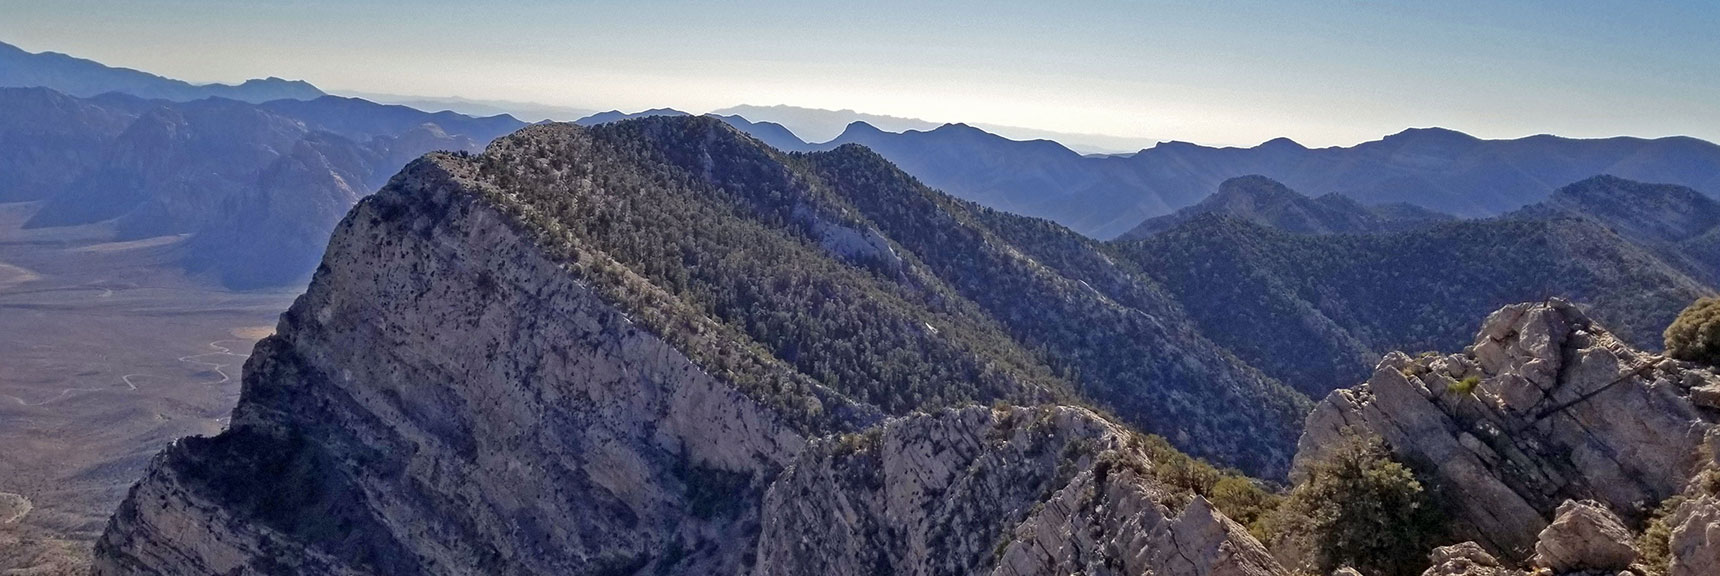 El Padre Mt Cliff and Long Summit | La Madre Mountain,, El Padre Mountain, Burnt Peak | La Madre Mountains Wilderness, Nevada